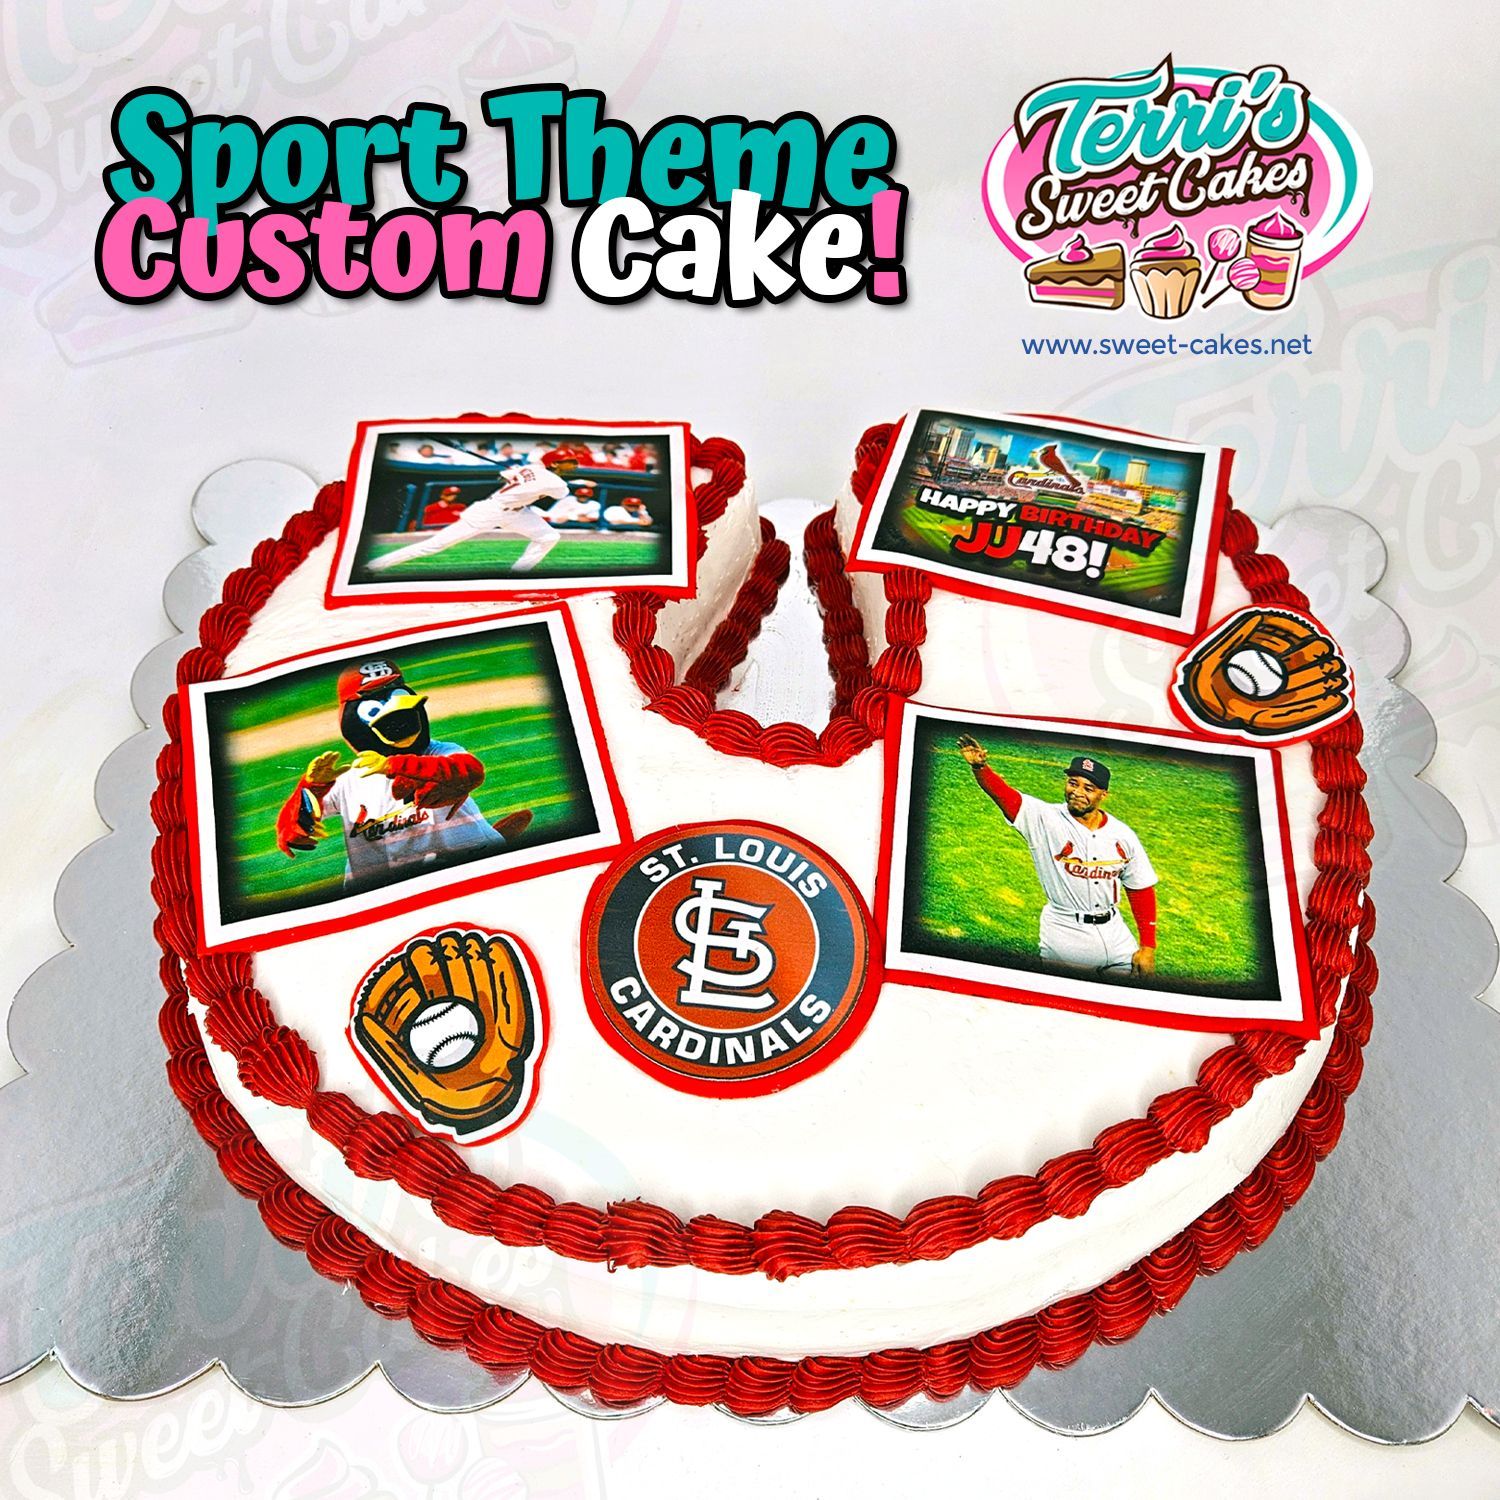 St. Louis Cardinals Horseshoe Cake by Terri's Sweet Cakes!